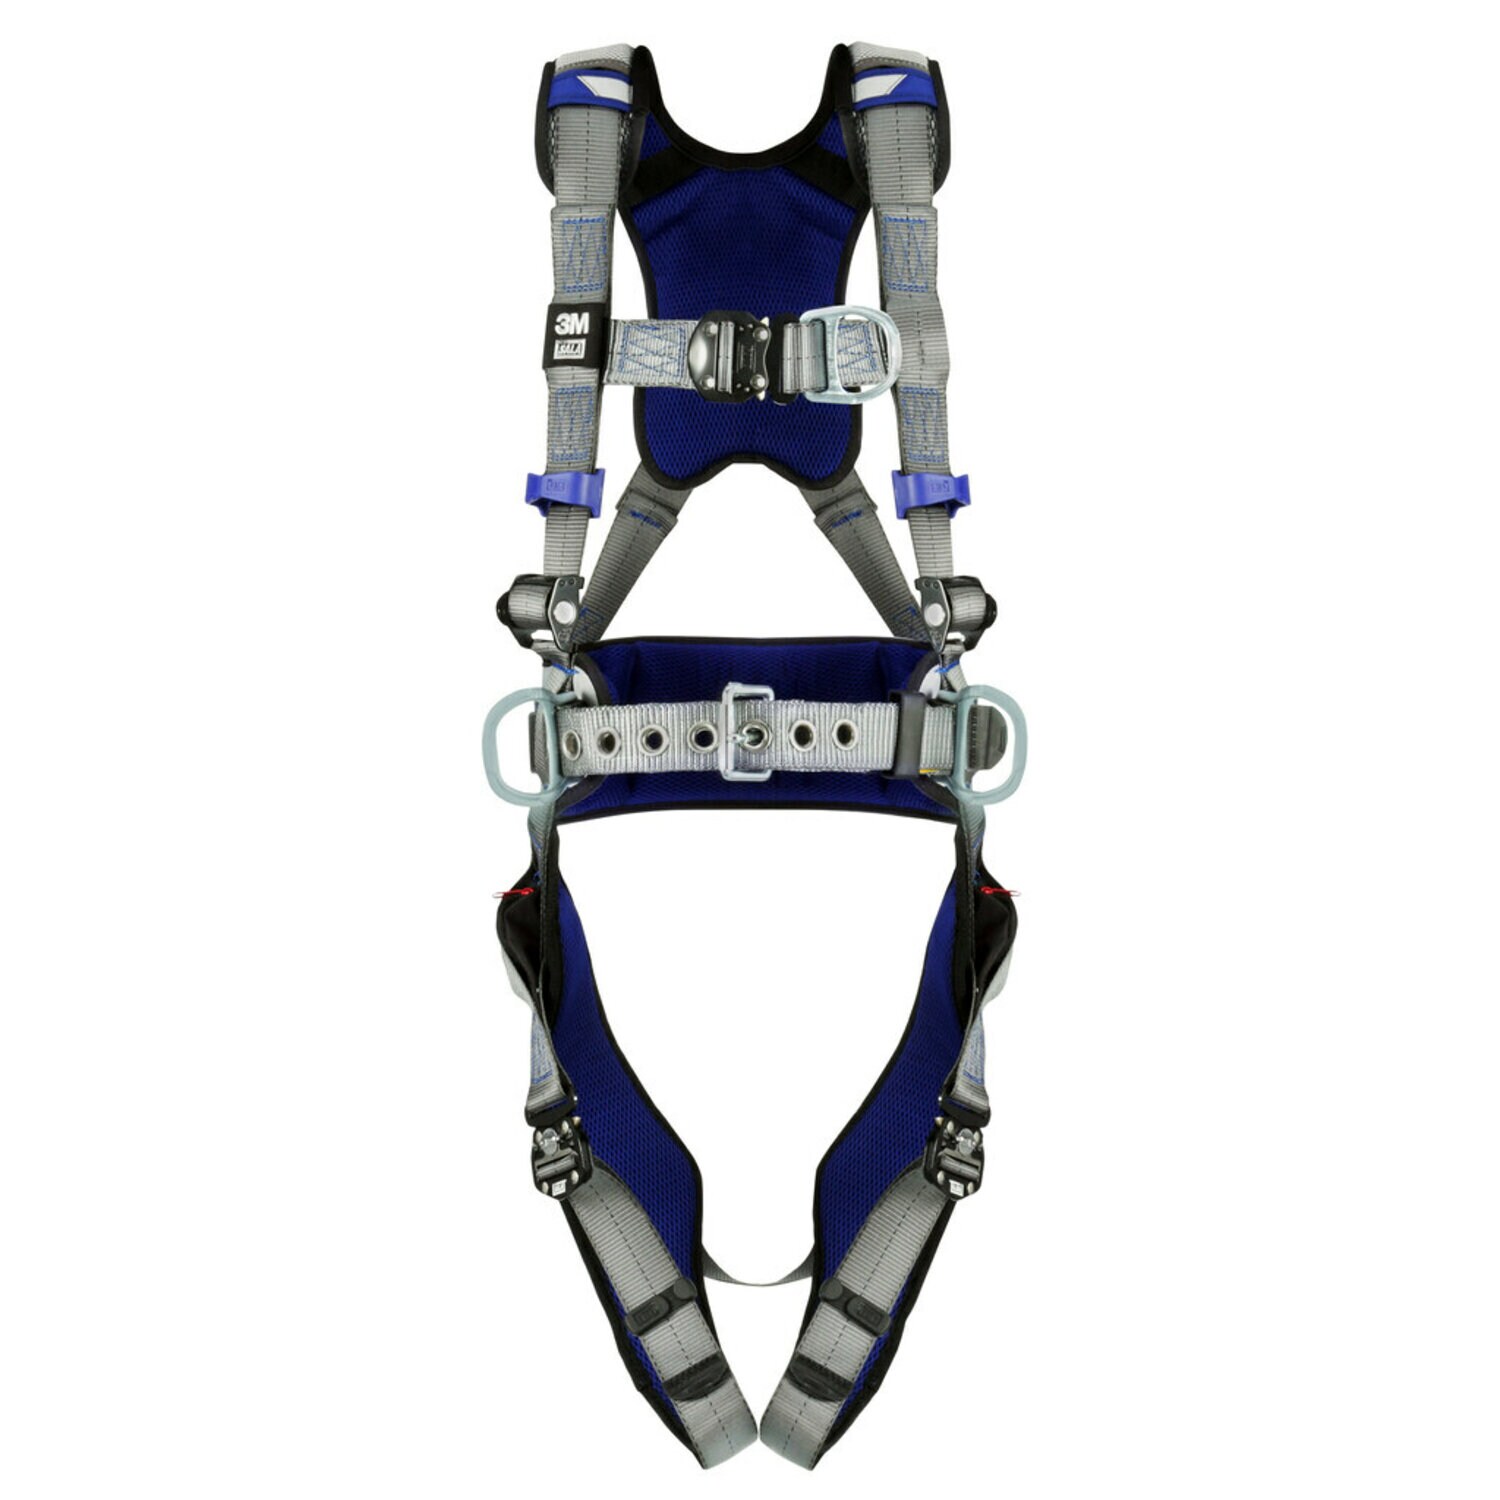 7012817846 - 3M DBI-SALA ExoFit X200 Comfort Construction Climbing/Positioning Safety Harness 1402111, Medium